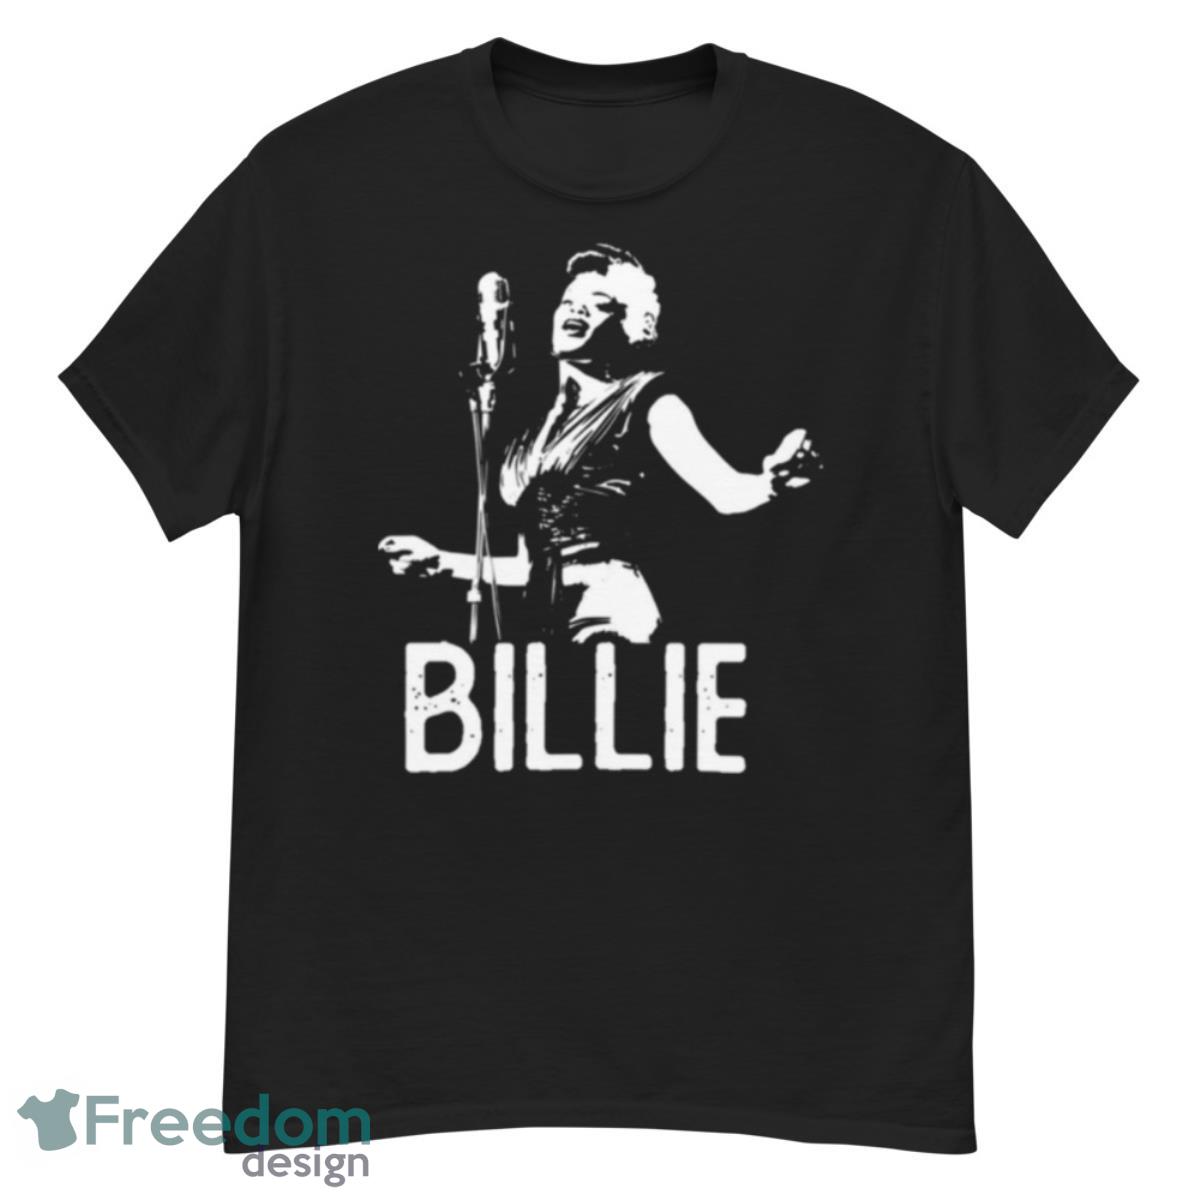 Jazz And Swing Music Singer Billie Holiday shirt - G500 Men’s Classic T-Shirt